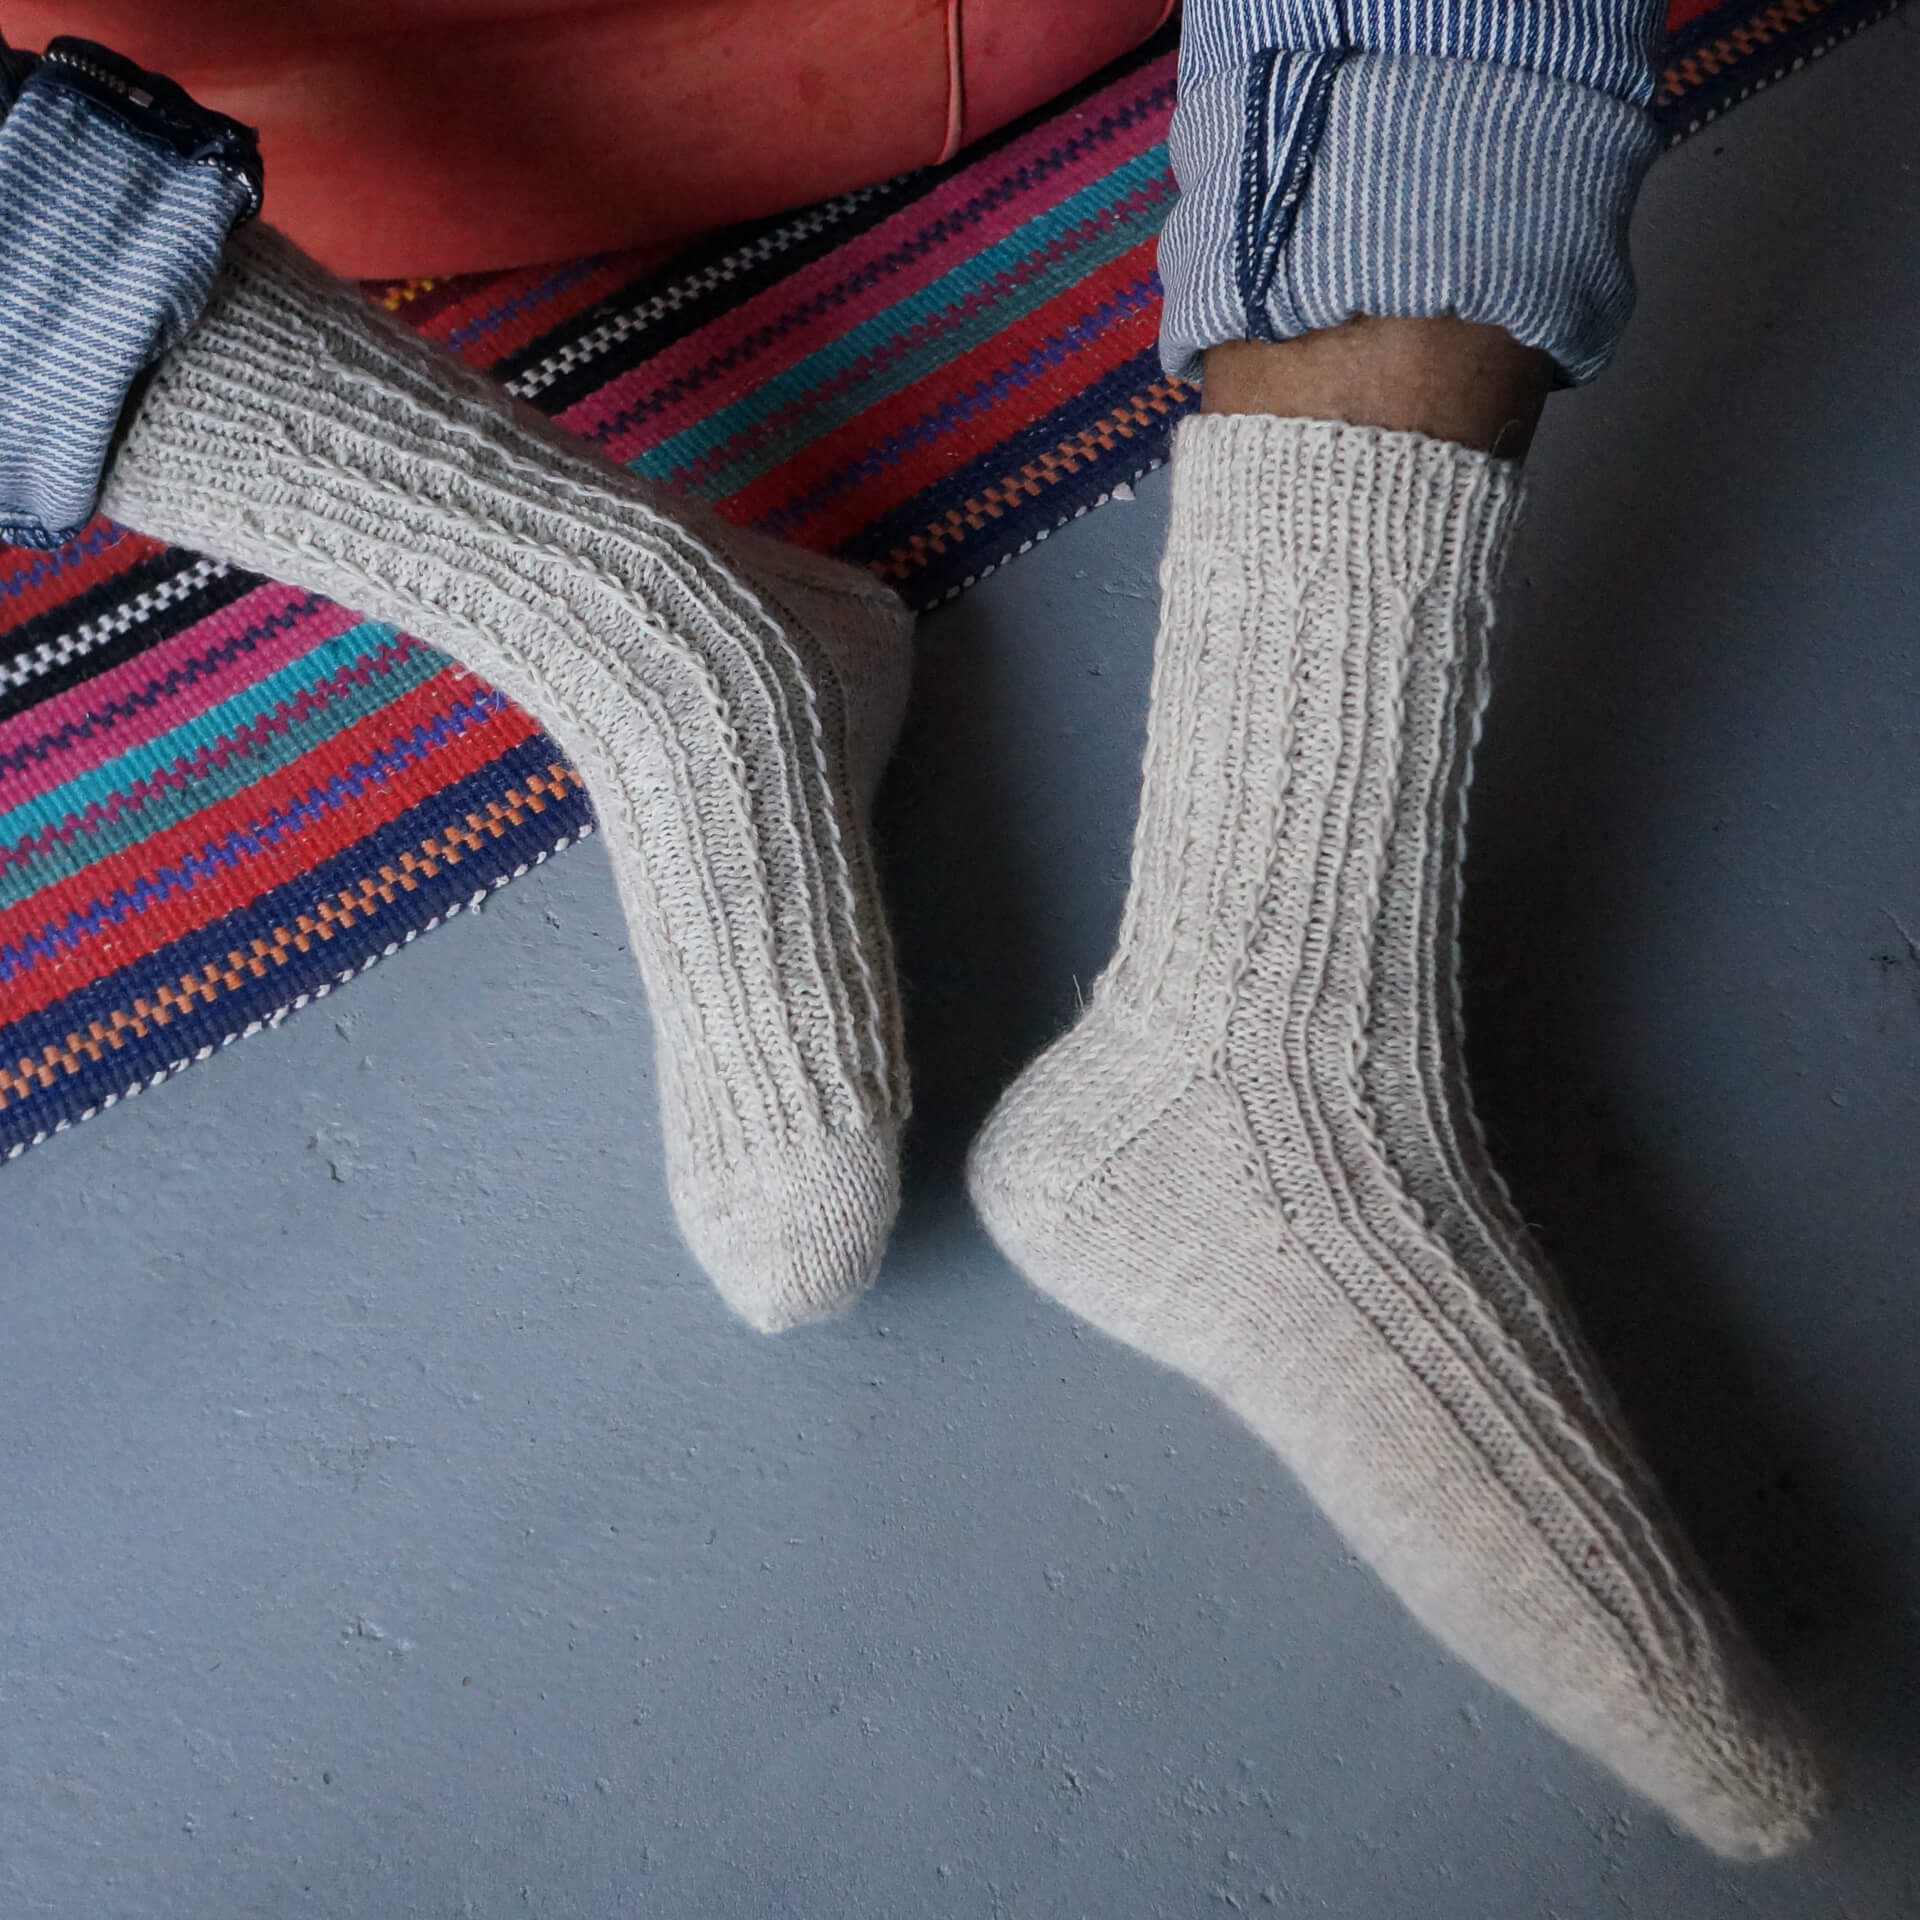 https://thecrimsonstitchery.com/wp-content/uploads/2022/03/birch-ply-socks-knitting-pattern-the-crimson-stitchery-3.jpg